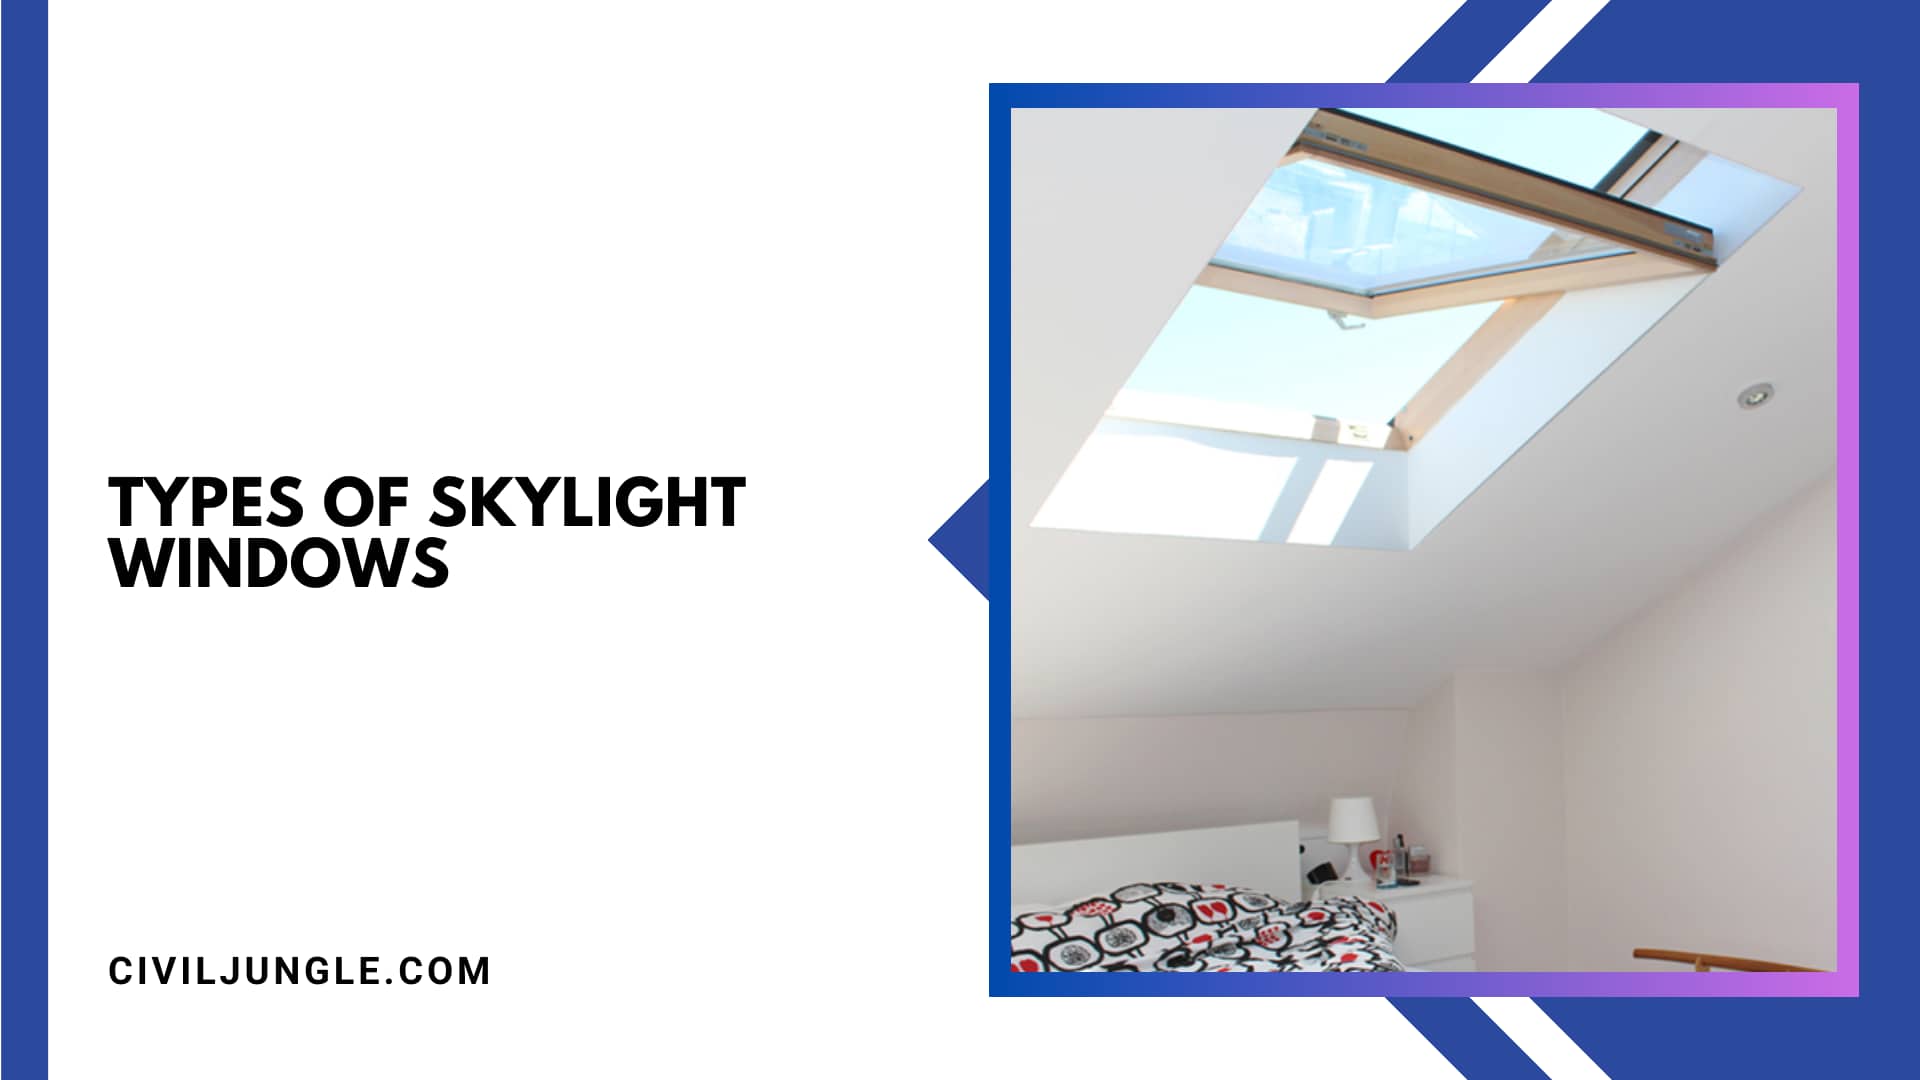 Types of Skylight Windows